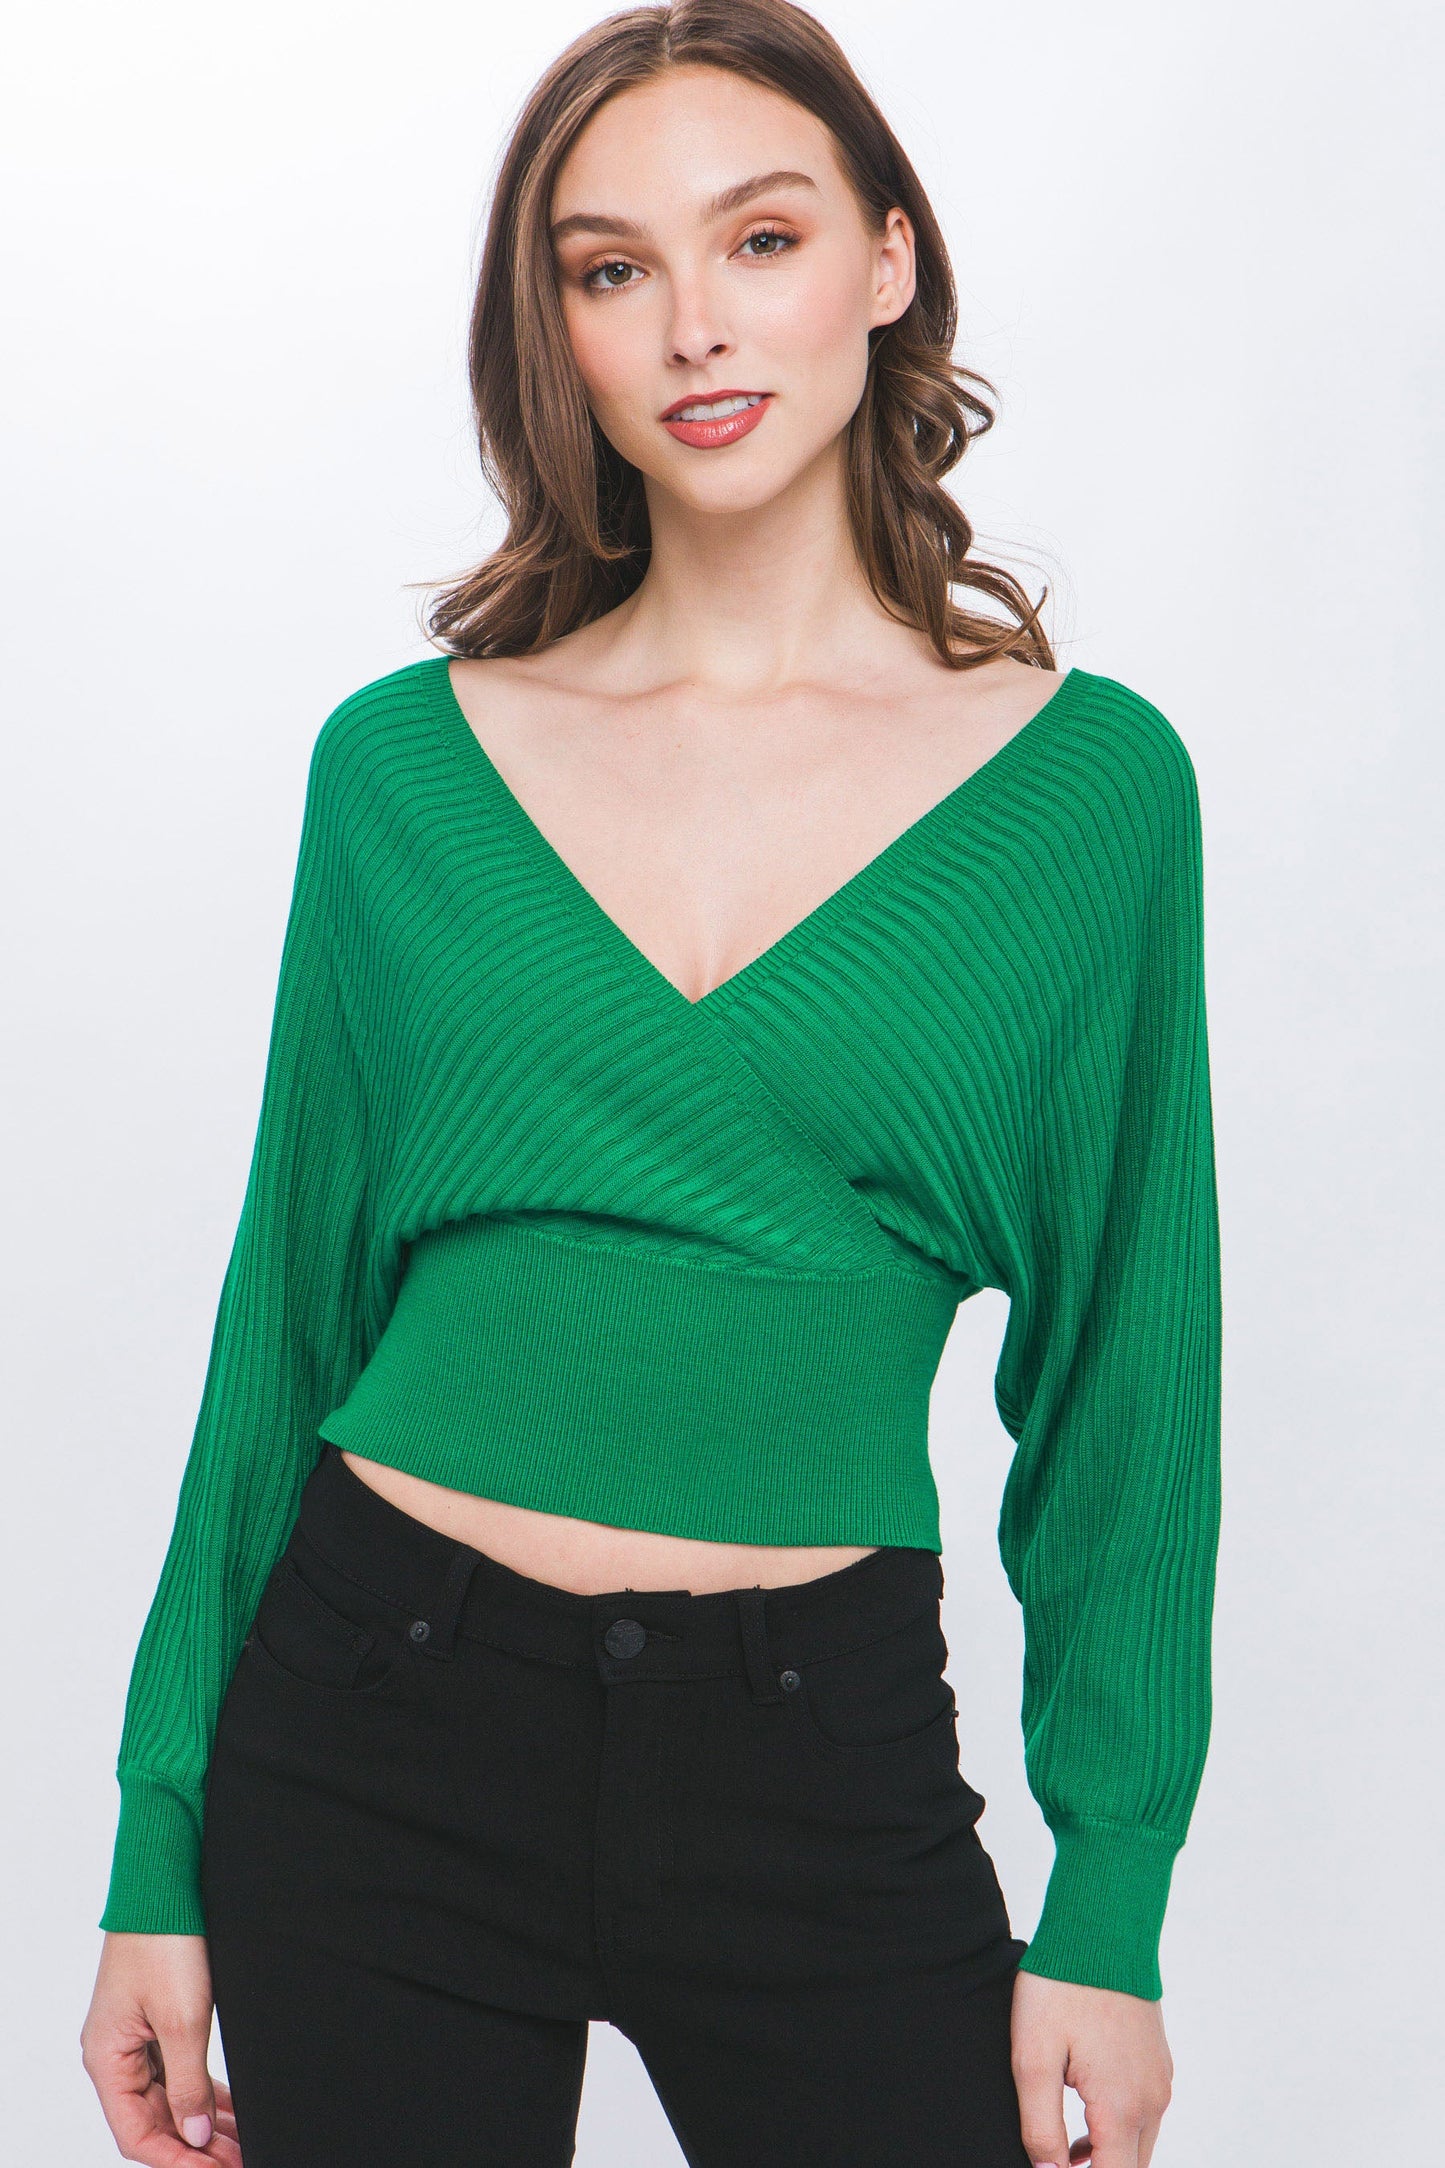 The Alauna Sweater in Kelly Green